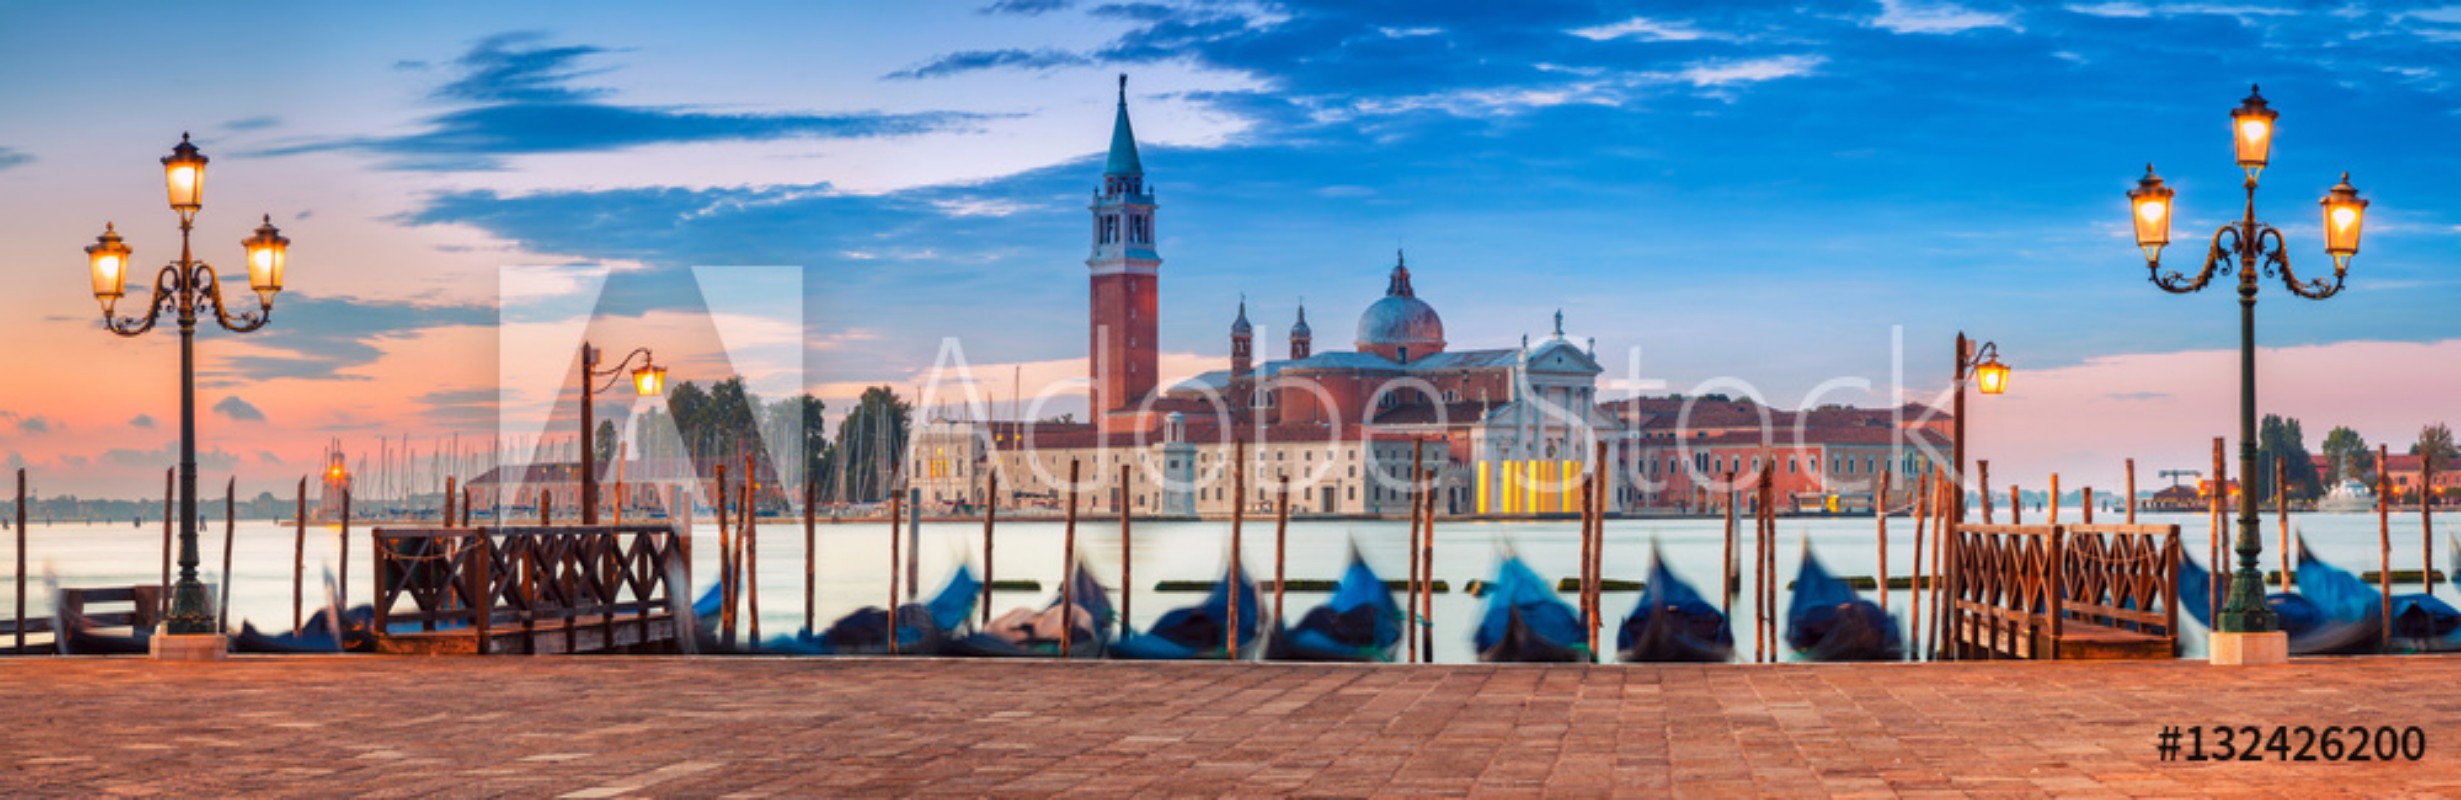 Afbeeldingen van Venice Panorama Panoramic image of Venice Italy during sunrise